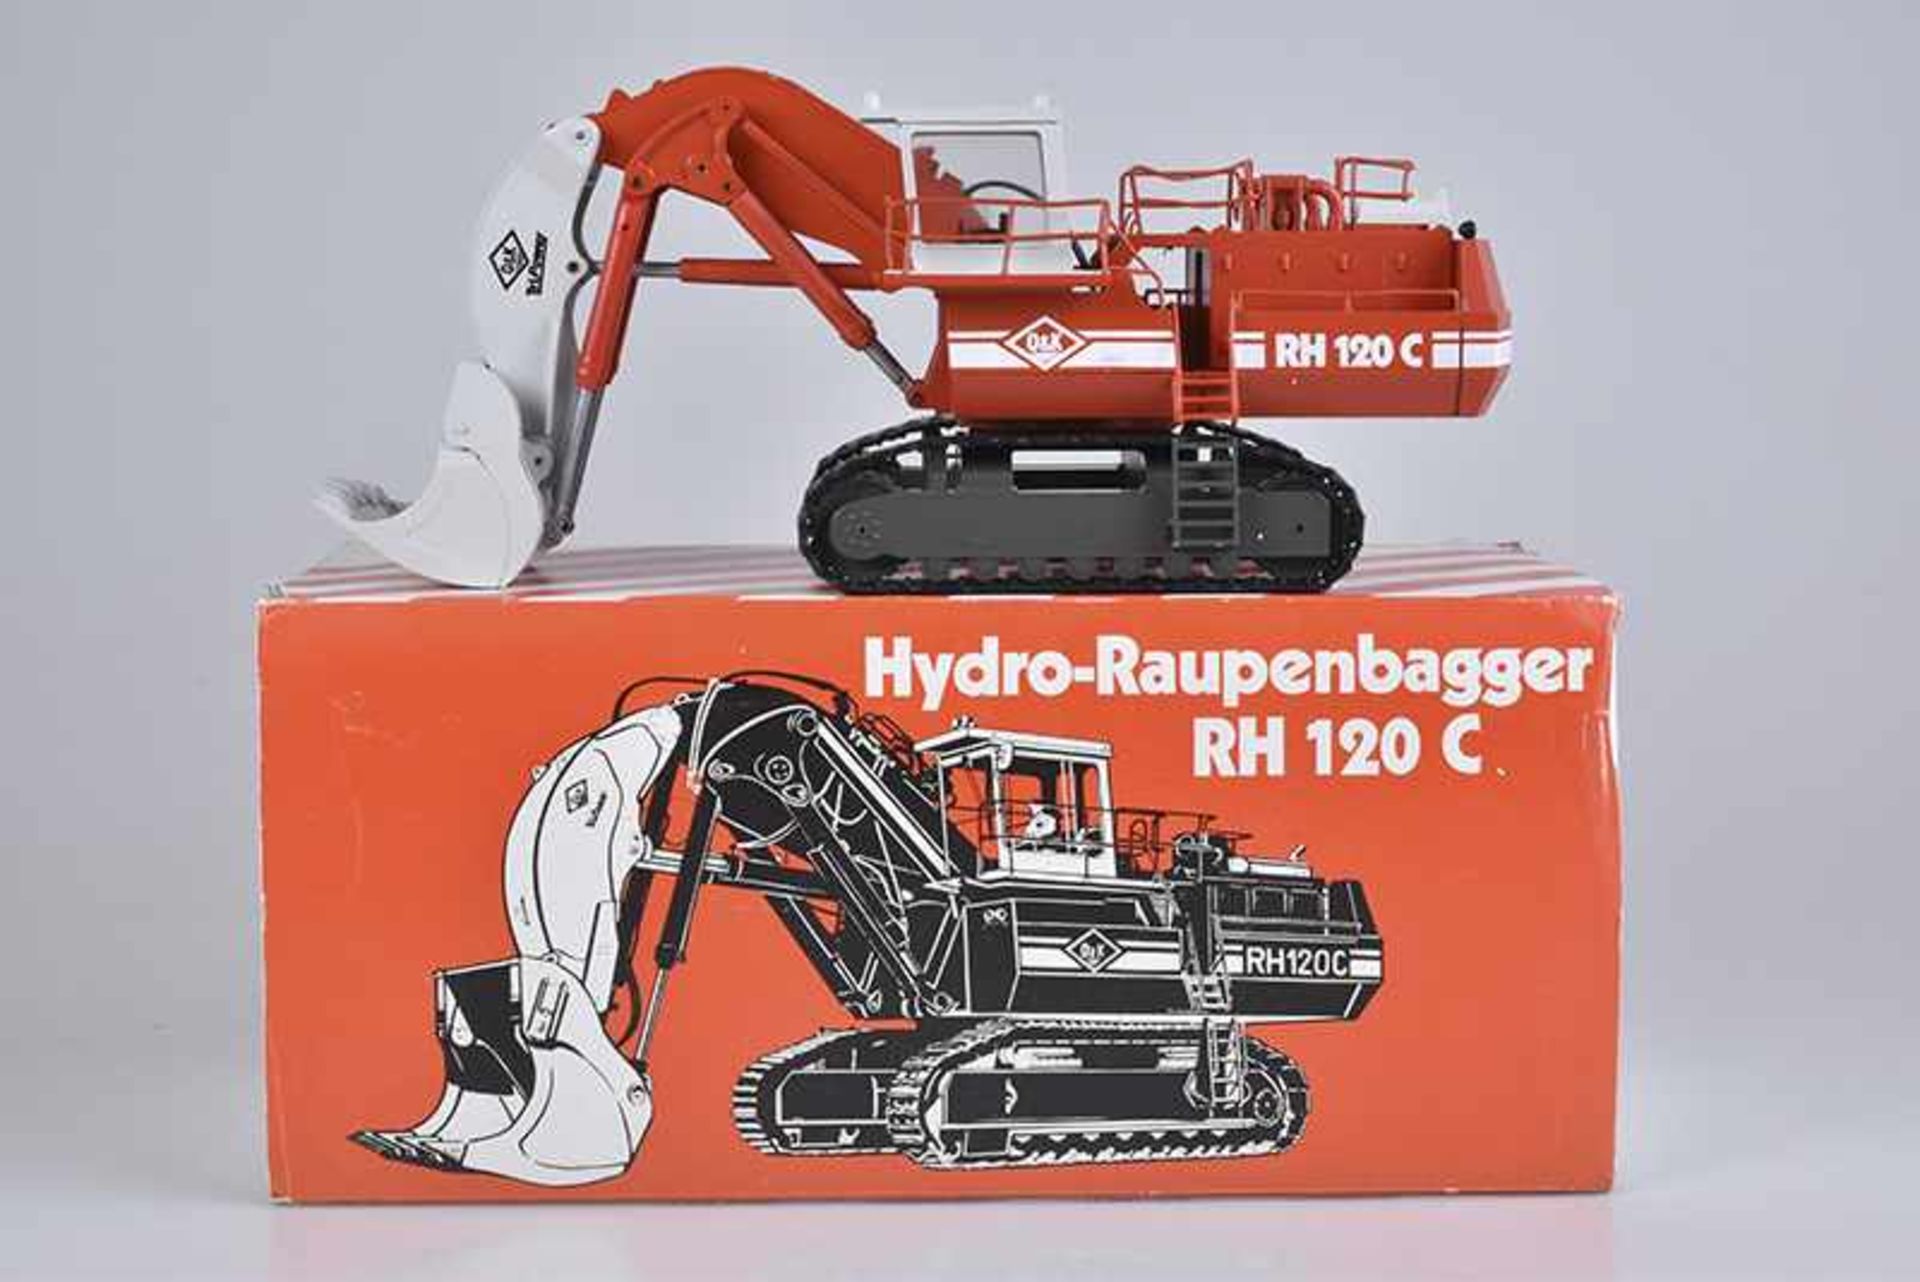 CONRAD Baumaschinen Modell, Hydro-Raupenbagger RH 120 C, Made in W.-Germany, Metall, M 1:50, Nr.